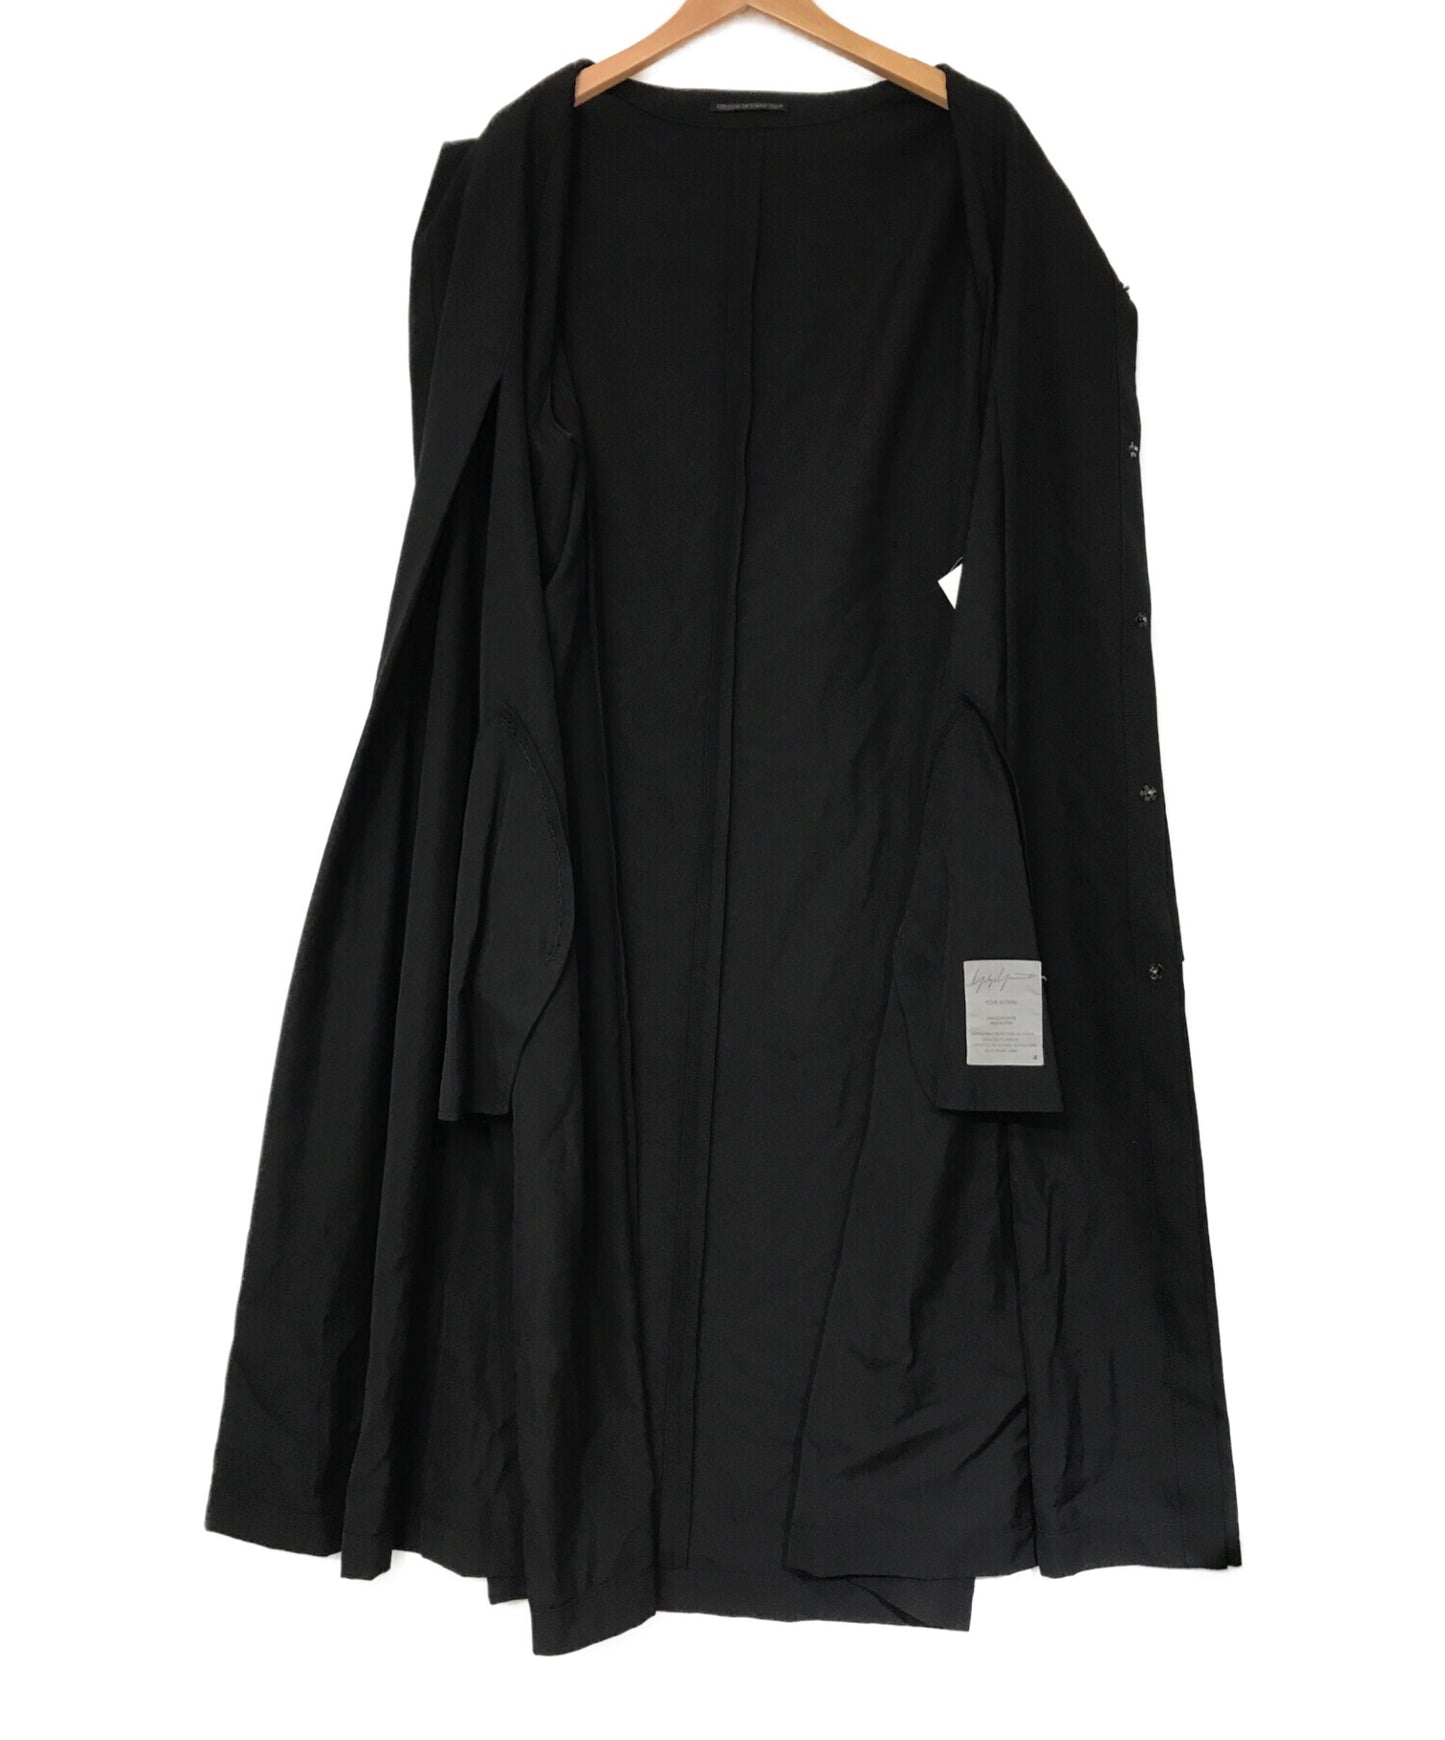 Yohji Yamamoto POUR HOMME Layered Design Coat HT-C047-T01